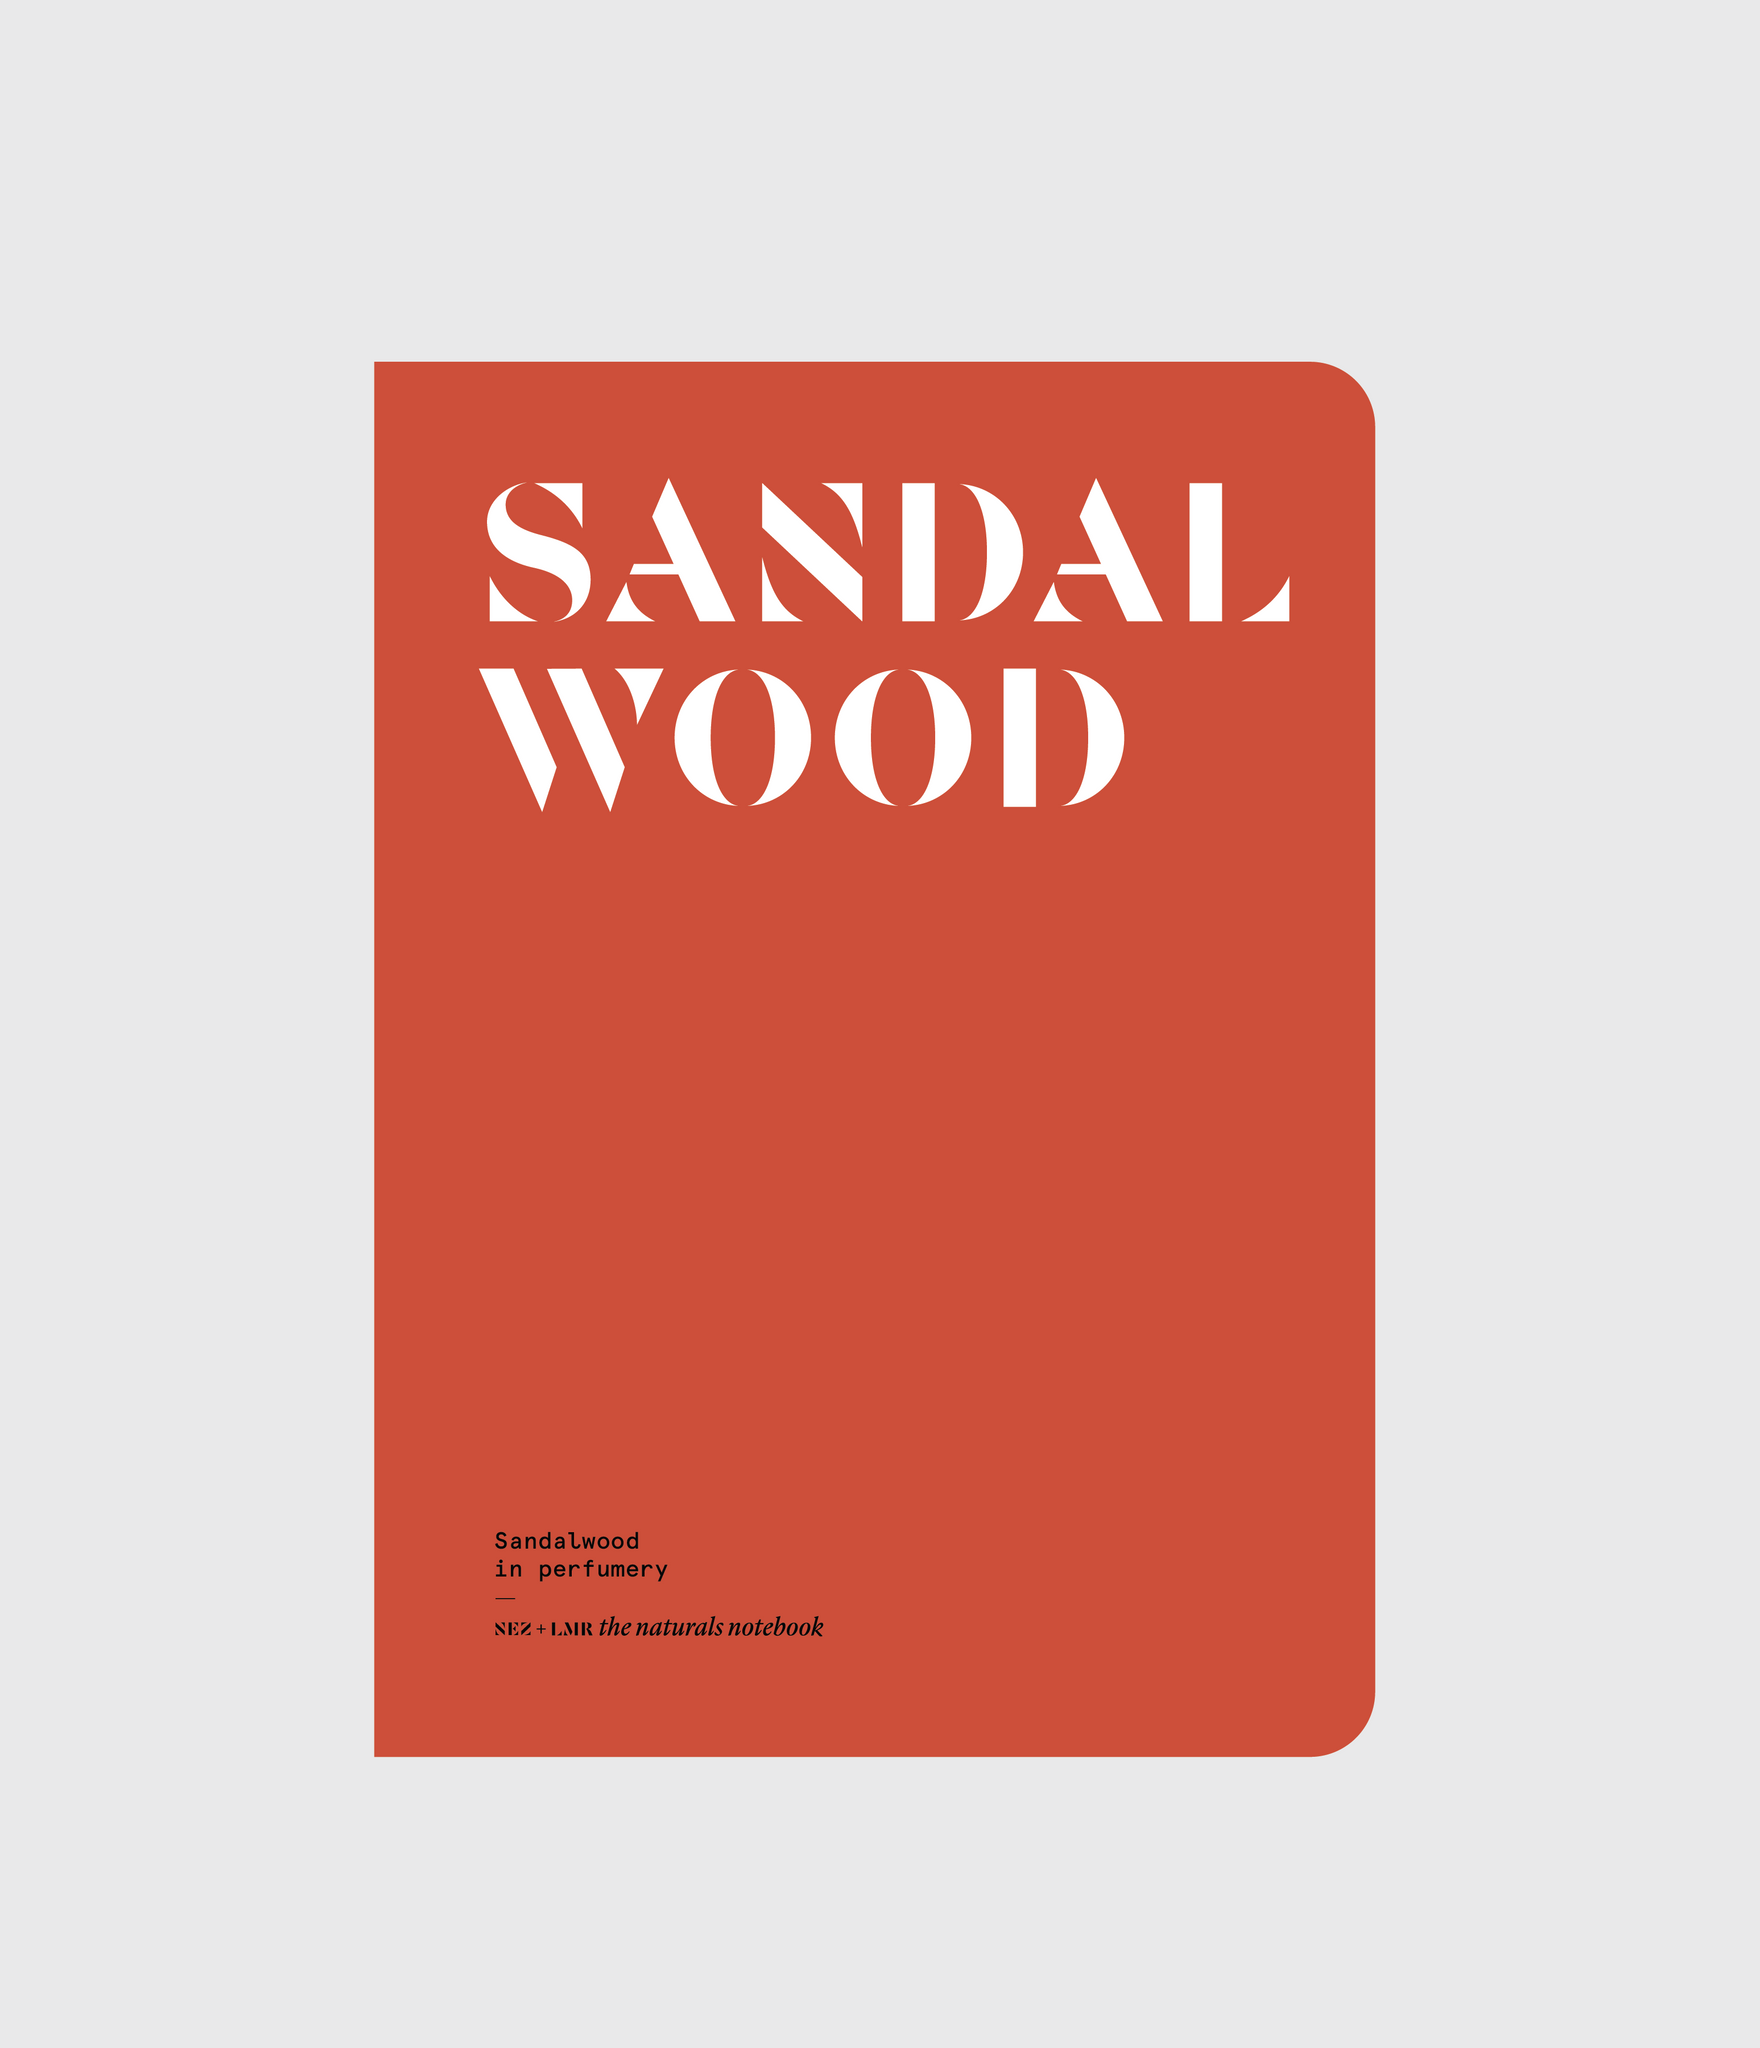 NEZ + LMR the naturals notebook | Sandalwood in Perfumery